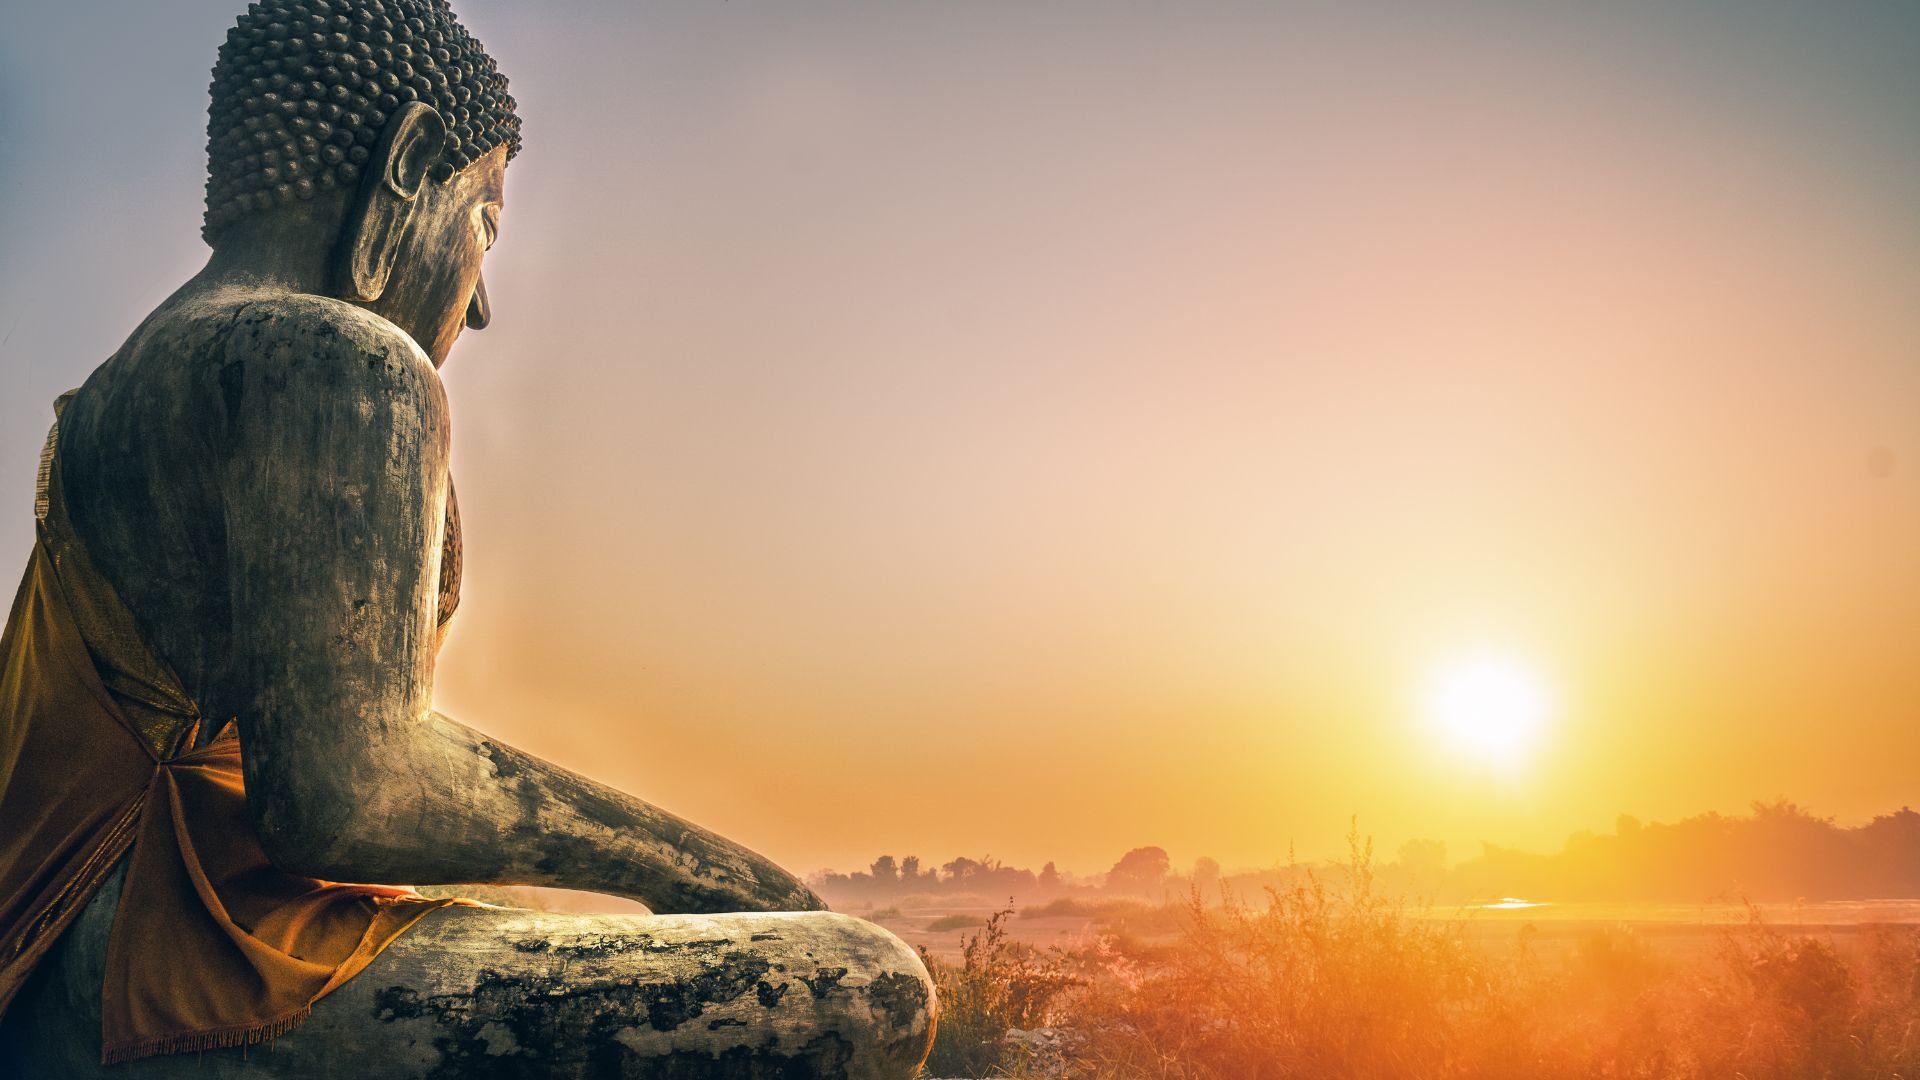 buddha-statue-in-sunlight.jpg